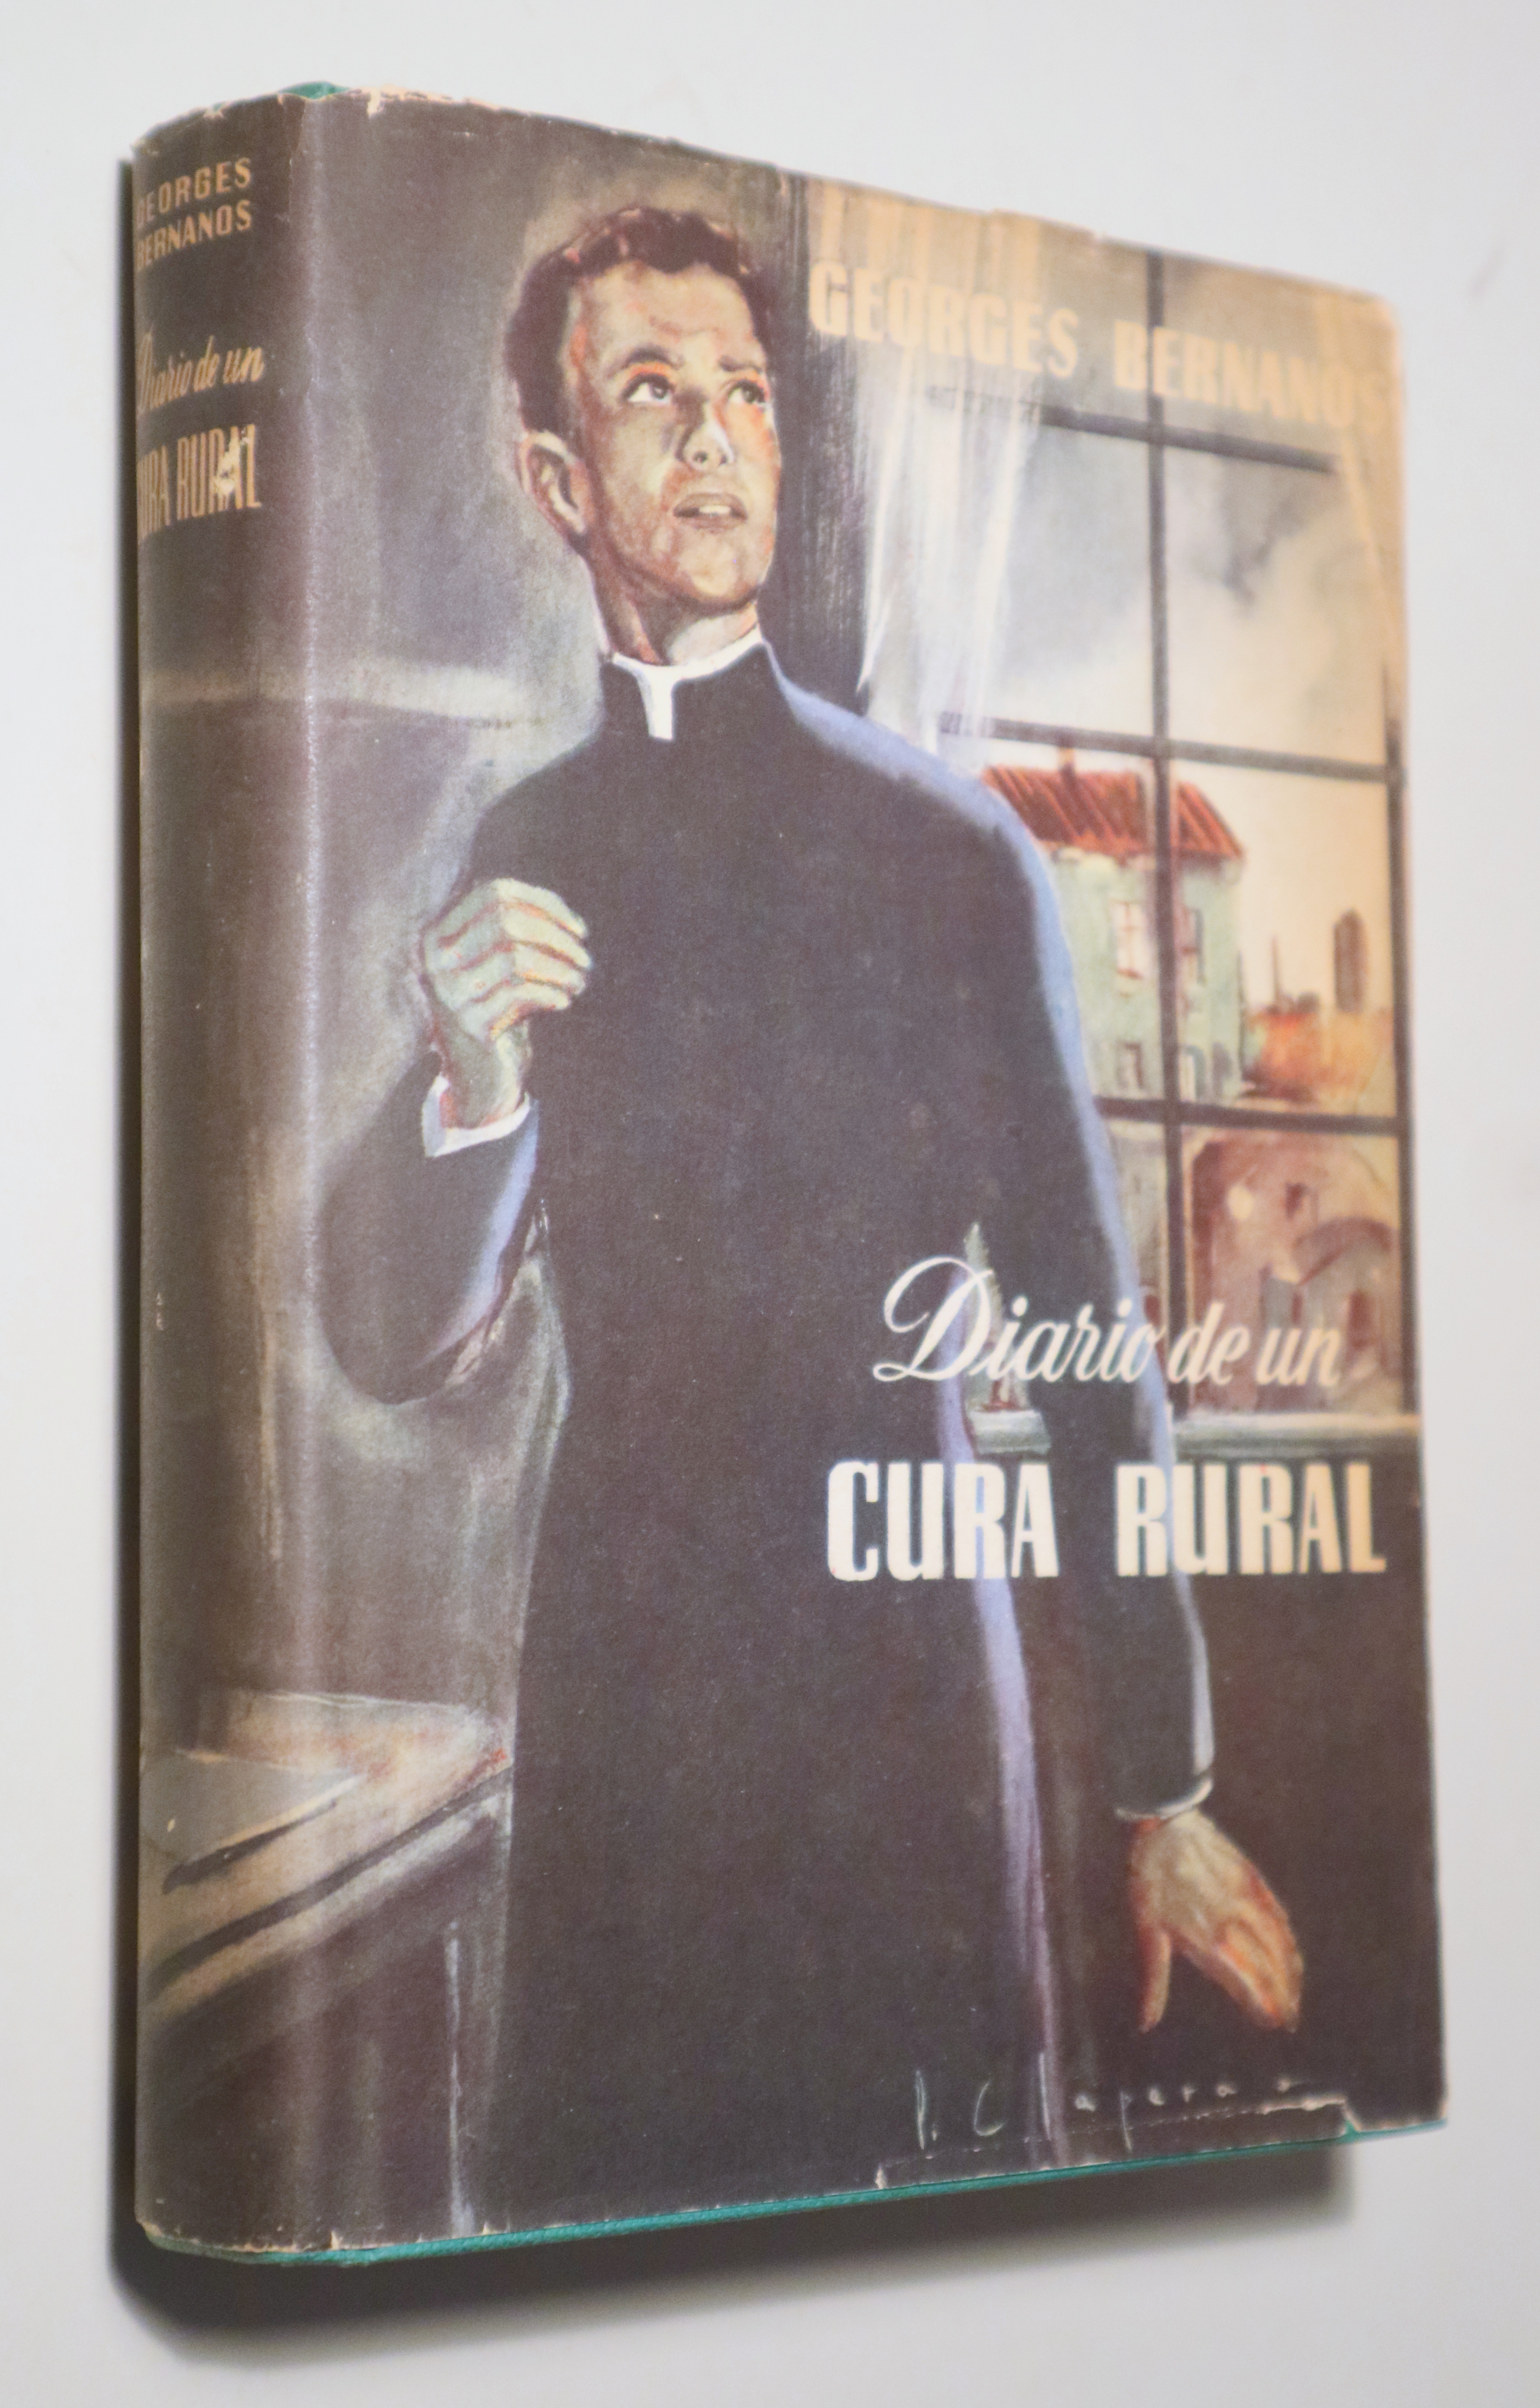 DIARIO DE UN CURA RURAL - Barcelonat 1959